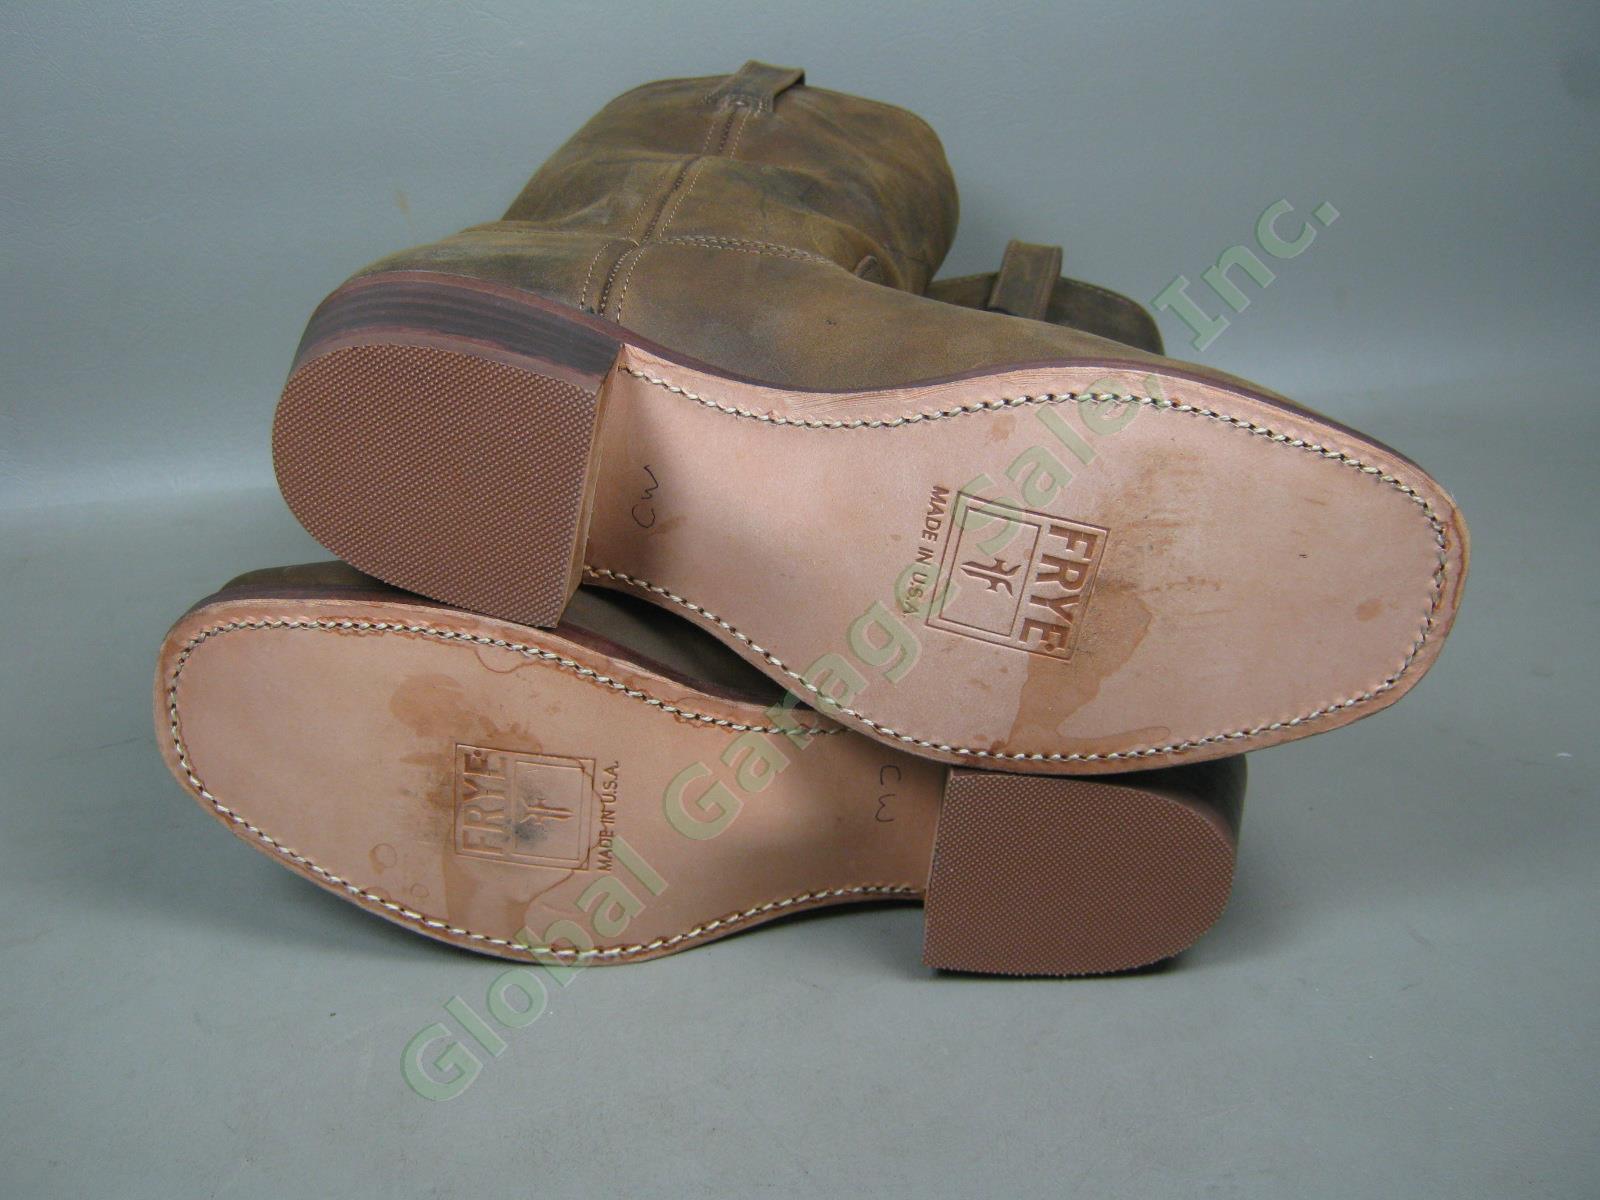 Mens Frye Cavalry 12L Tan Leather Boots Worn Once 9.5 Medium Width W/Box 87410-1 8